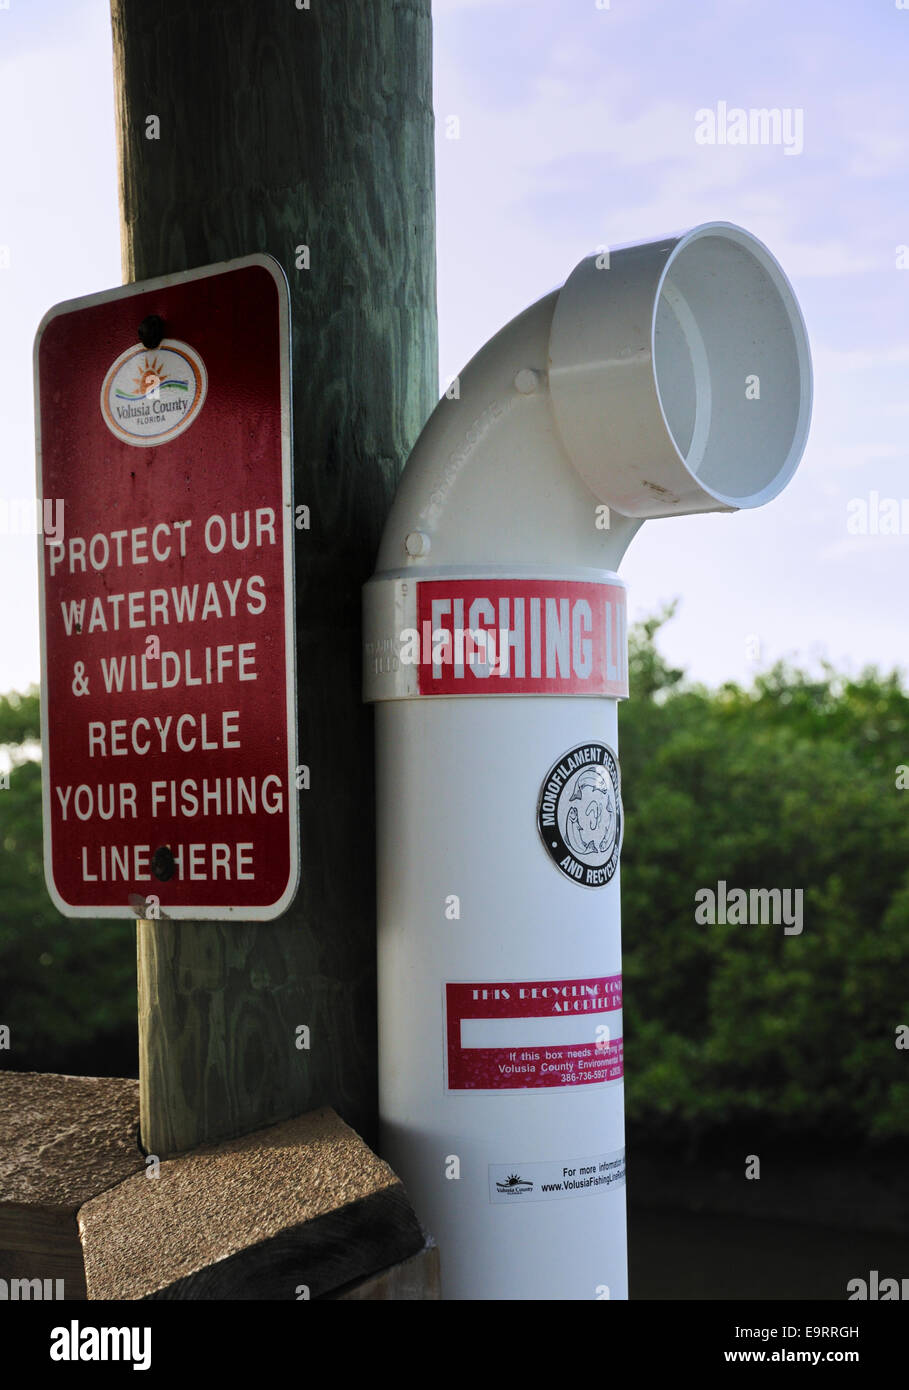 Recycling fishing line florida environment hi-res stock